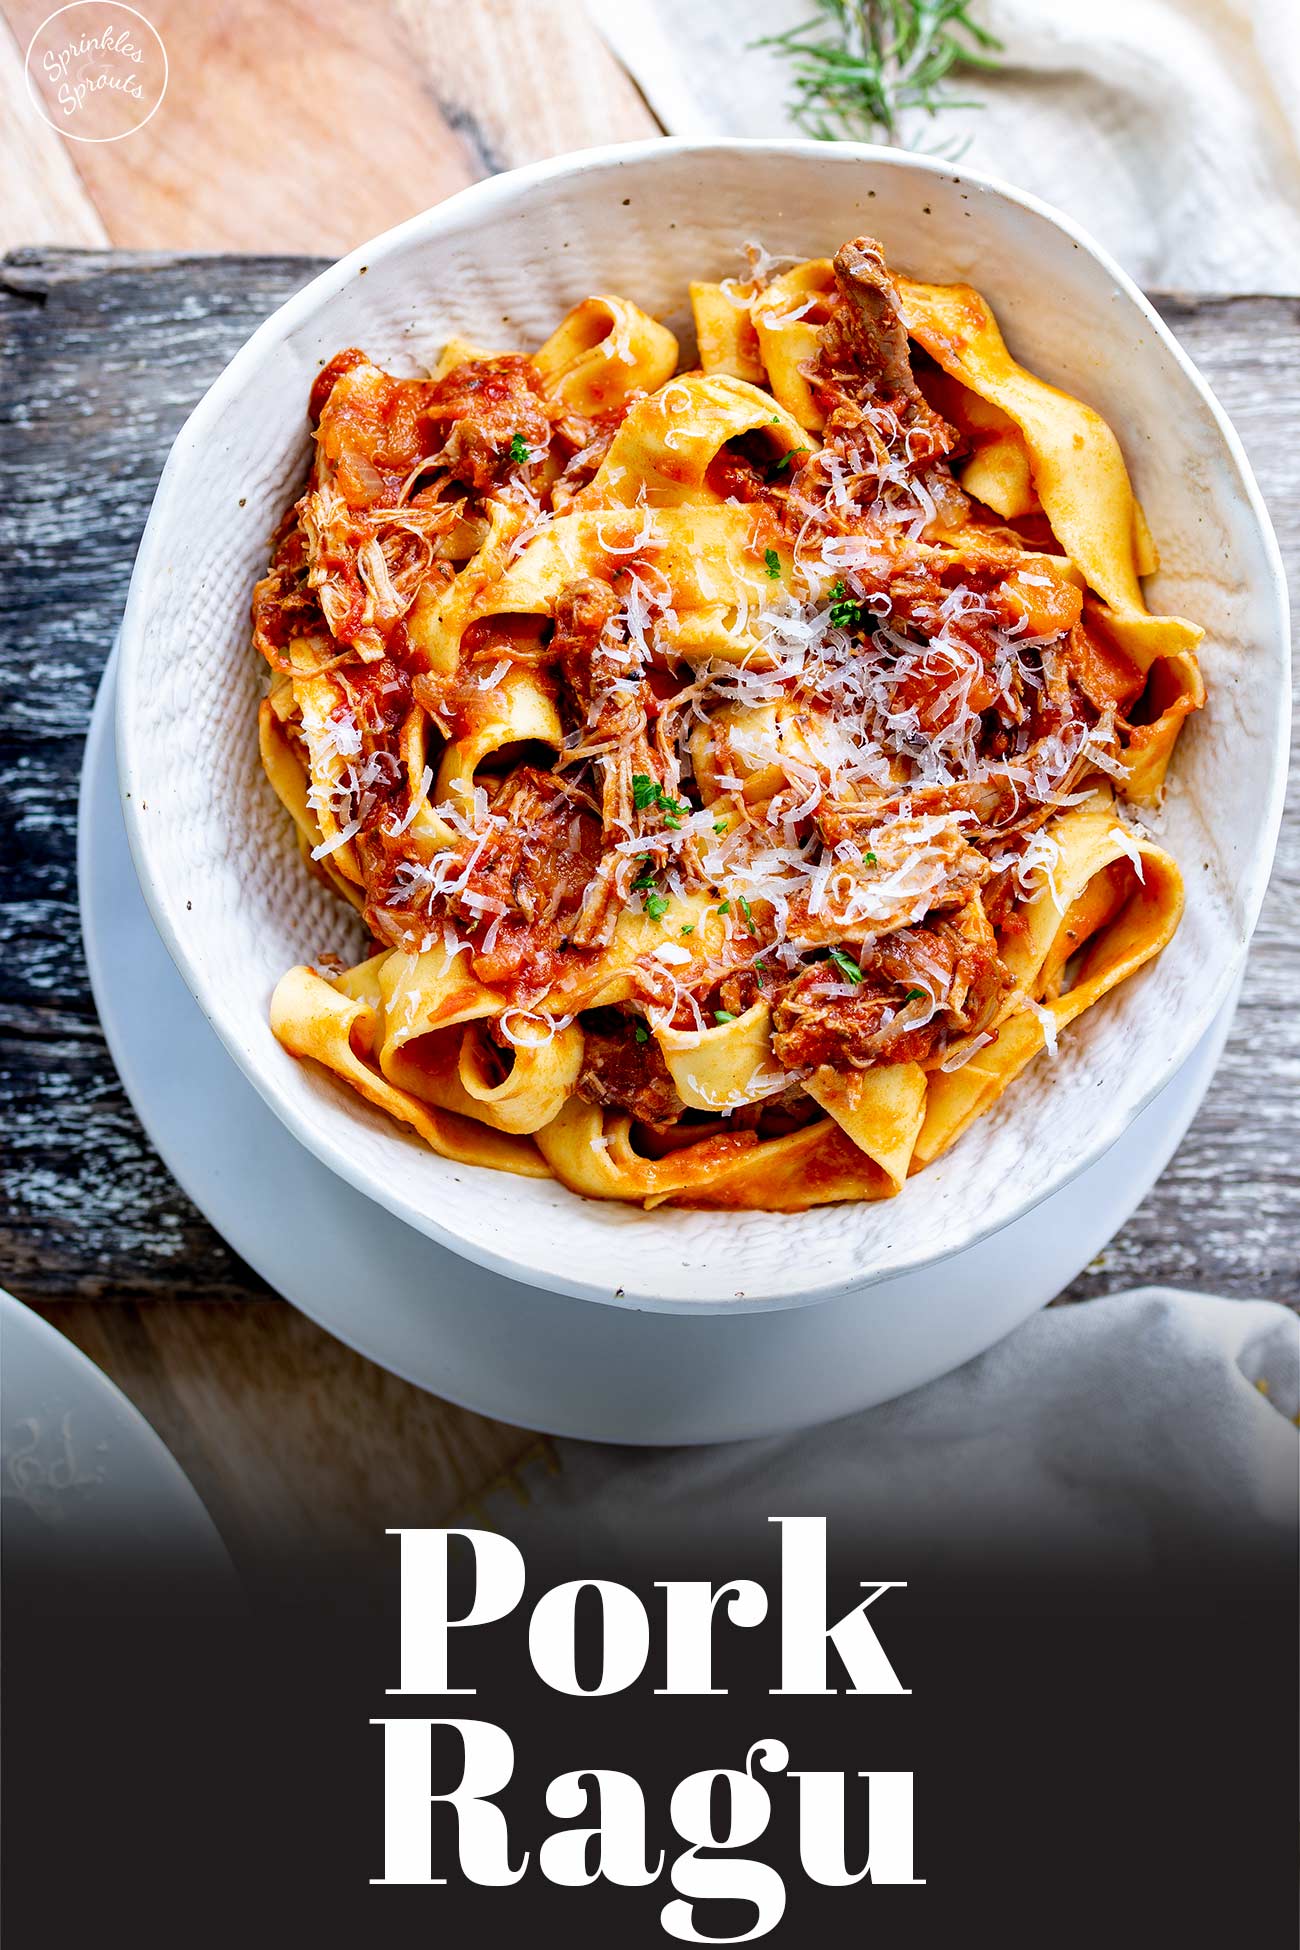 PINTEREST IMAGE: Pork Ragu Pasta with text overlay